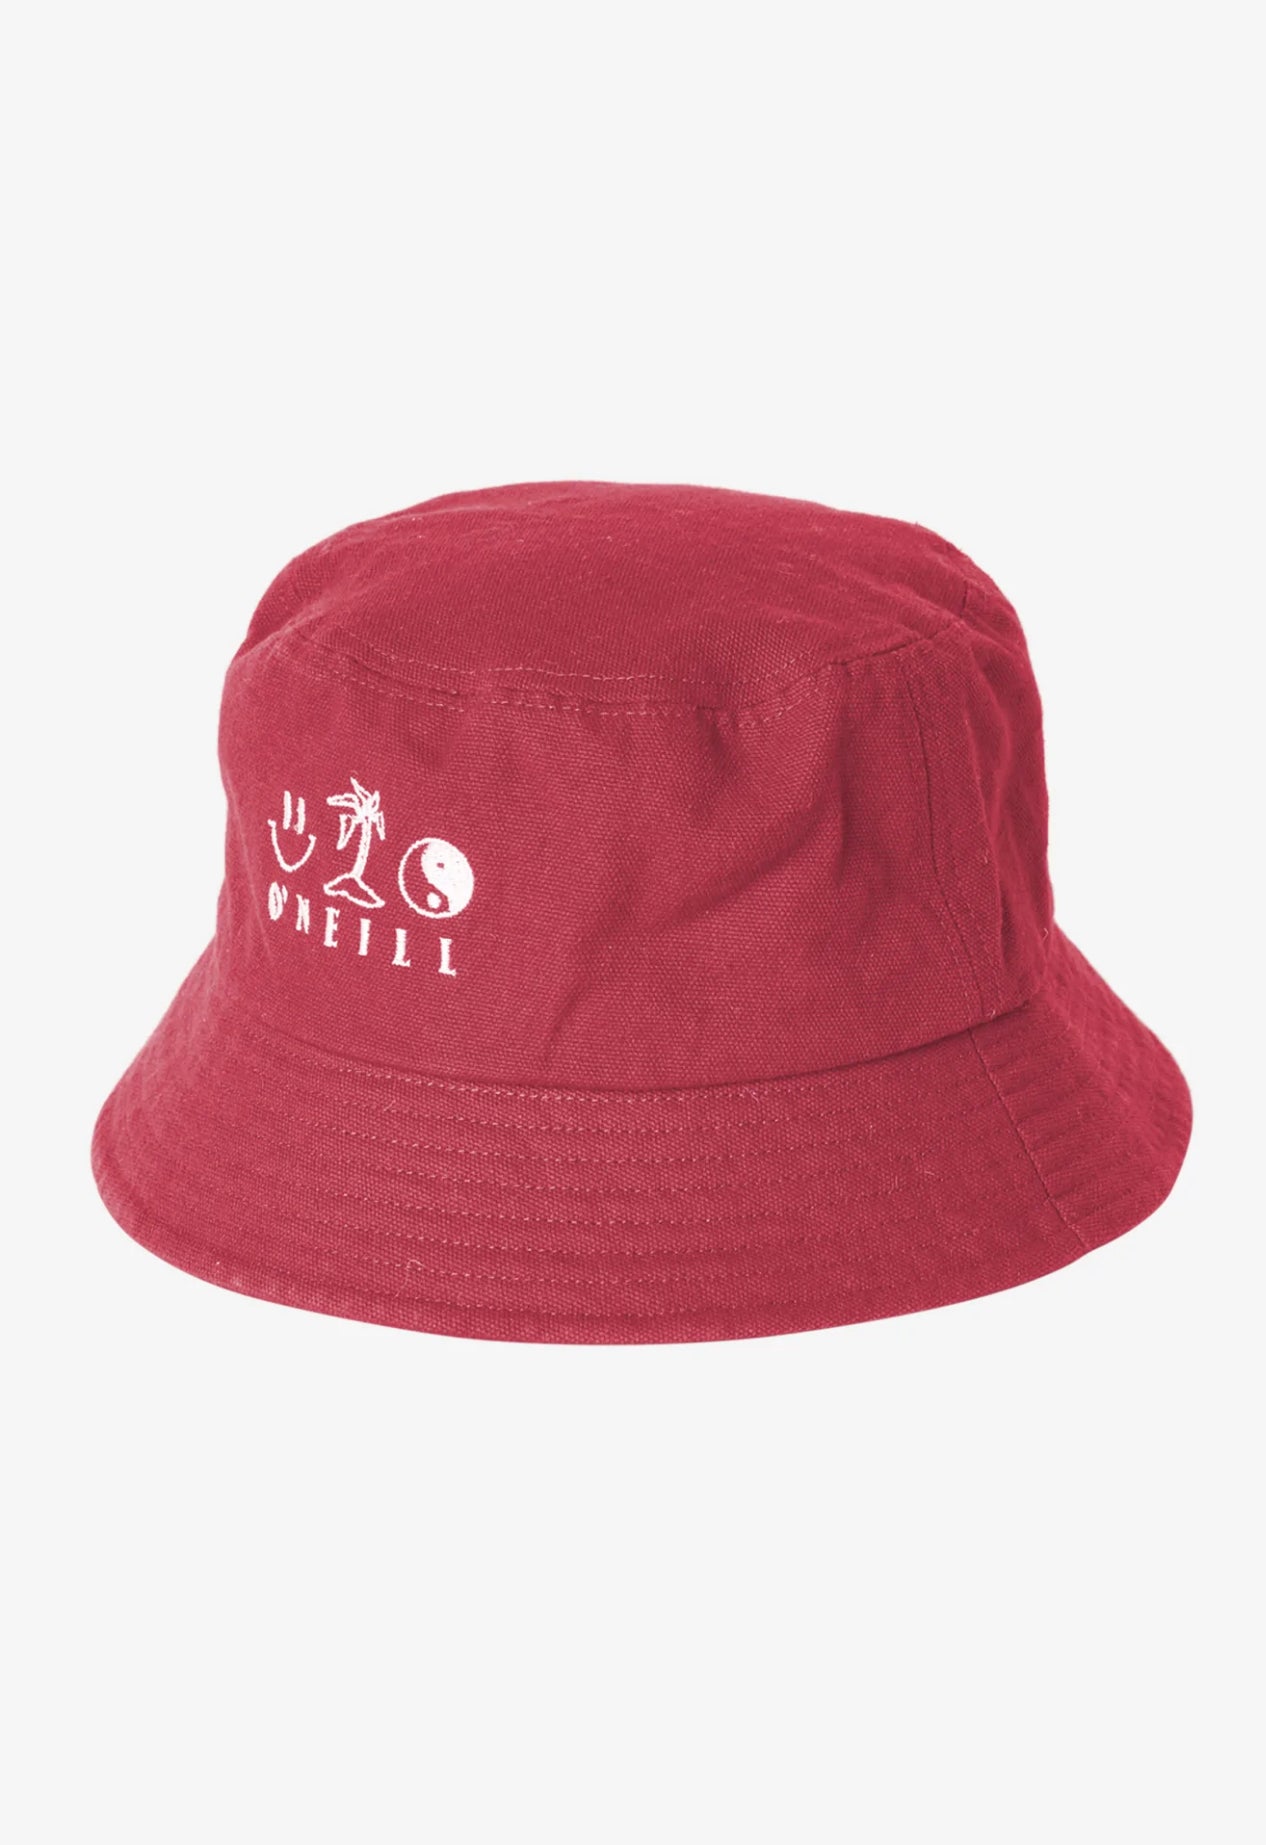 ONEILL PIPER BUCKET HAT